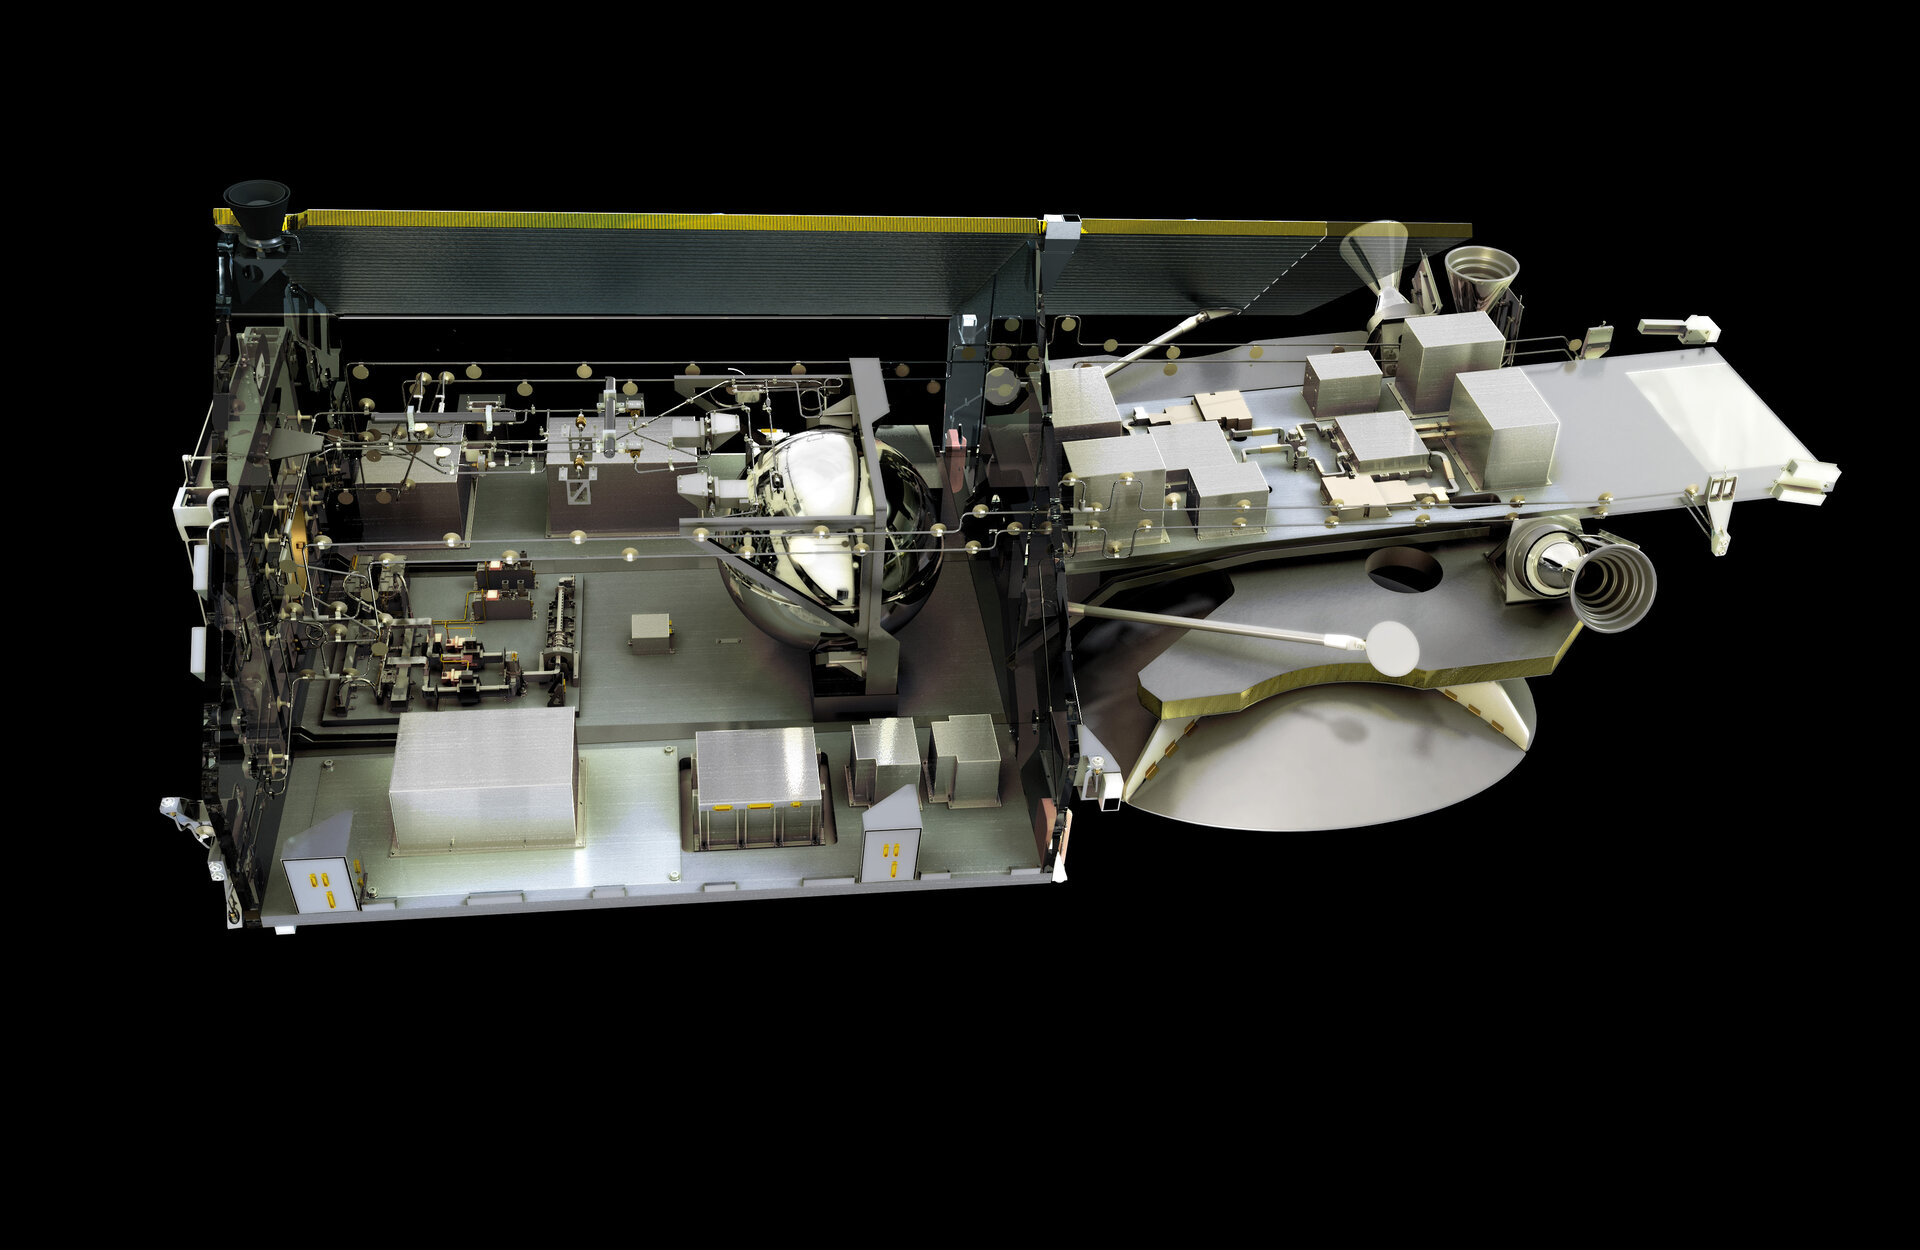 Inside the CryoSat-2 satellite